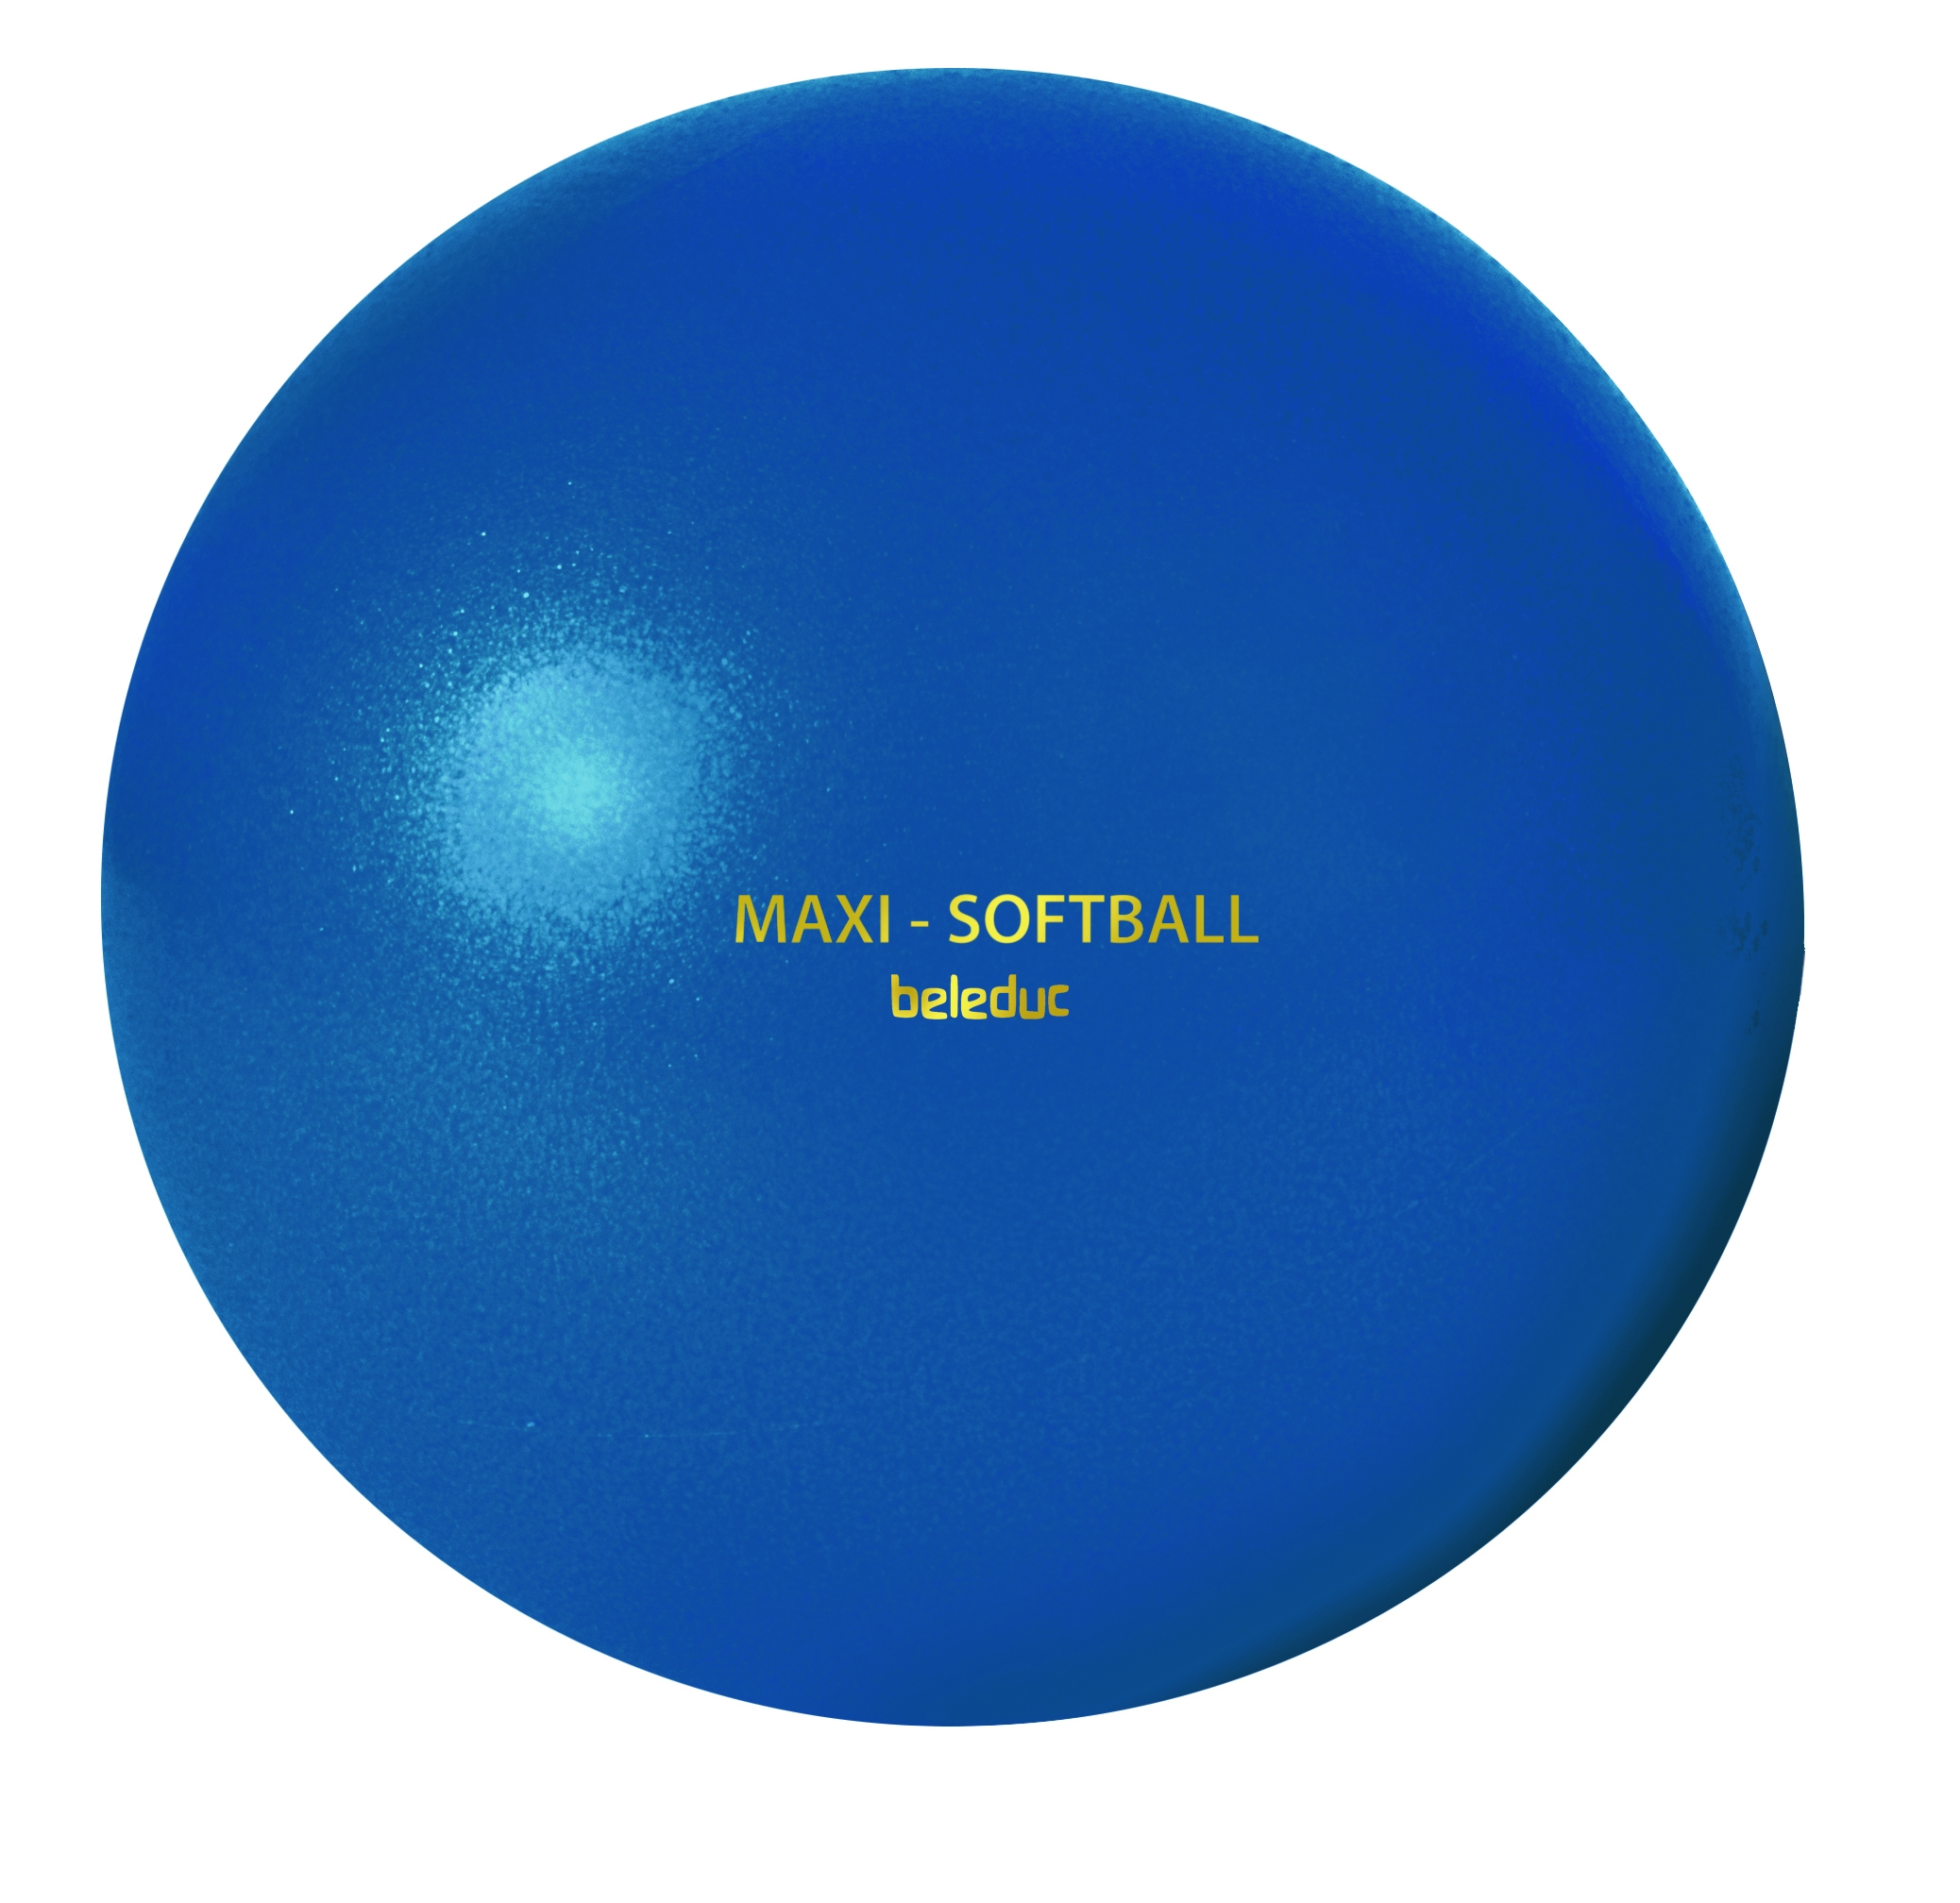 aufblasbarer Maxi-Softball